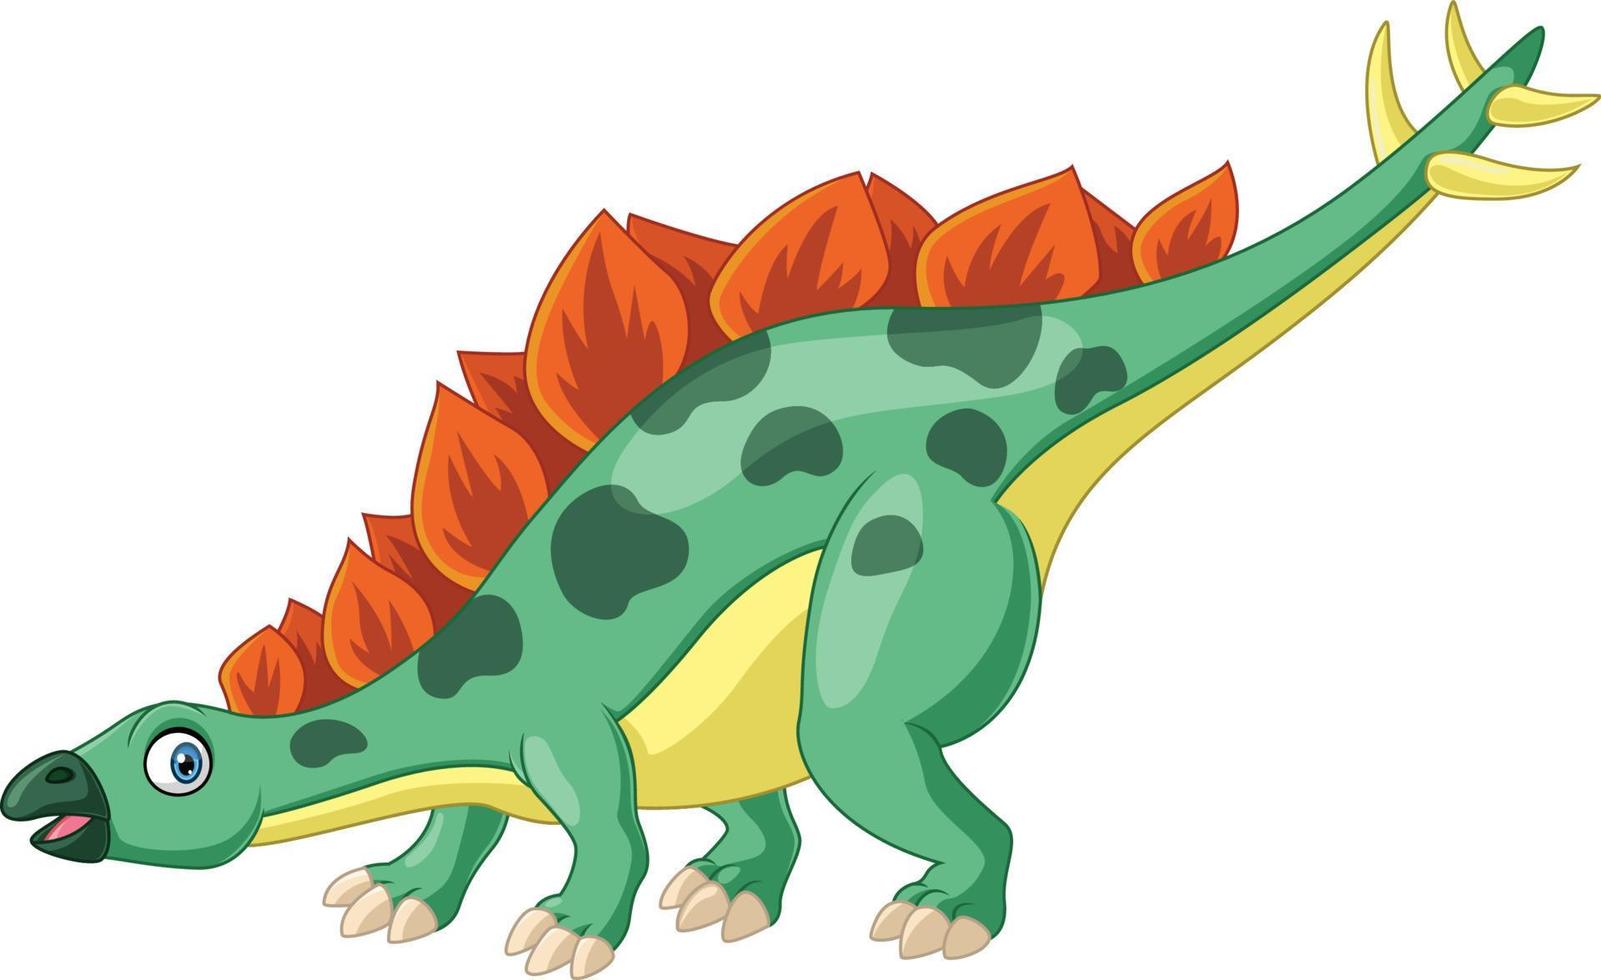 Cartoon stegosaurus on white background vector